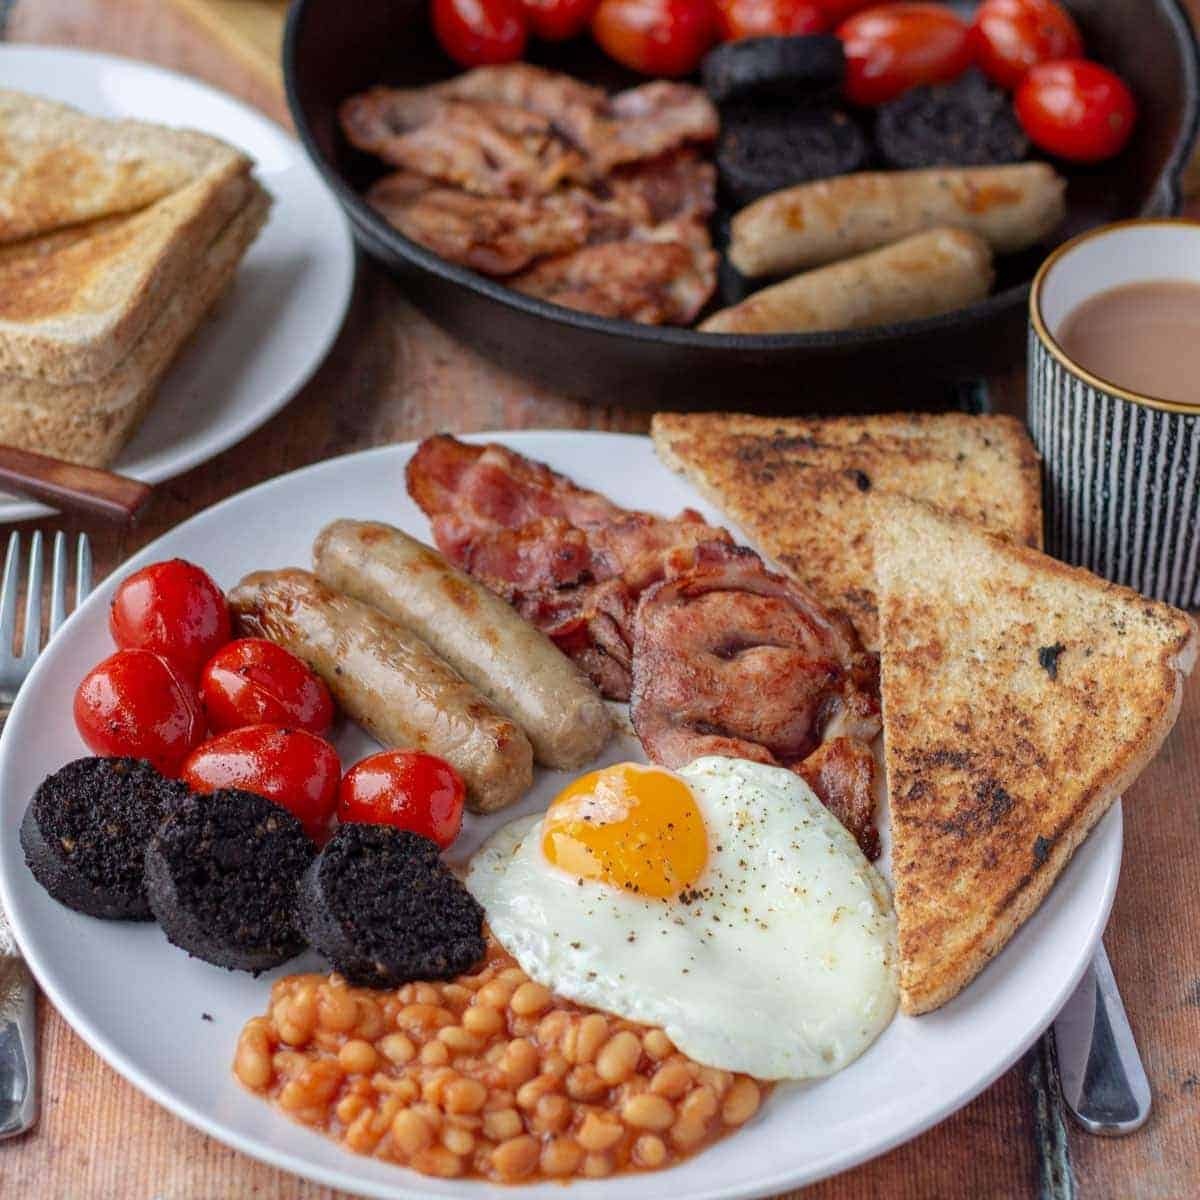 Идти завтракать на английском. Бритиш Брекфаст. Фул Инглиш Брекфаст. Английский завтрак Британия. Традиционная английская еда завтрак.